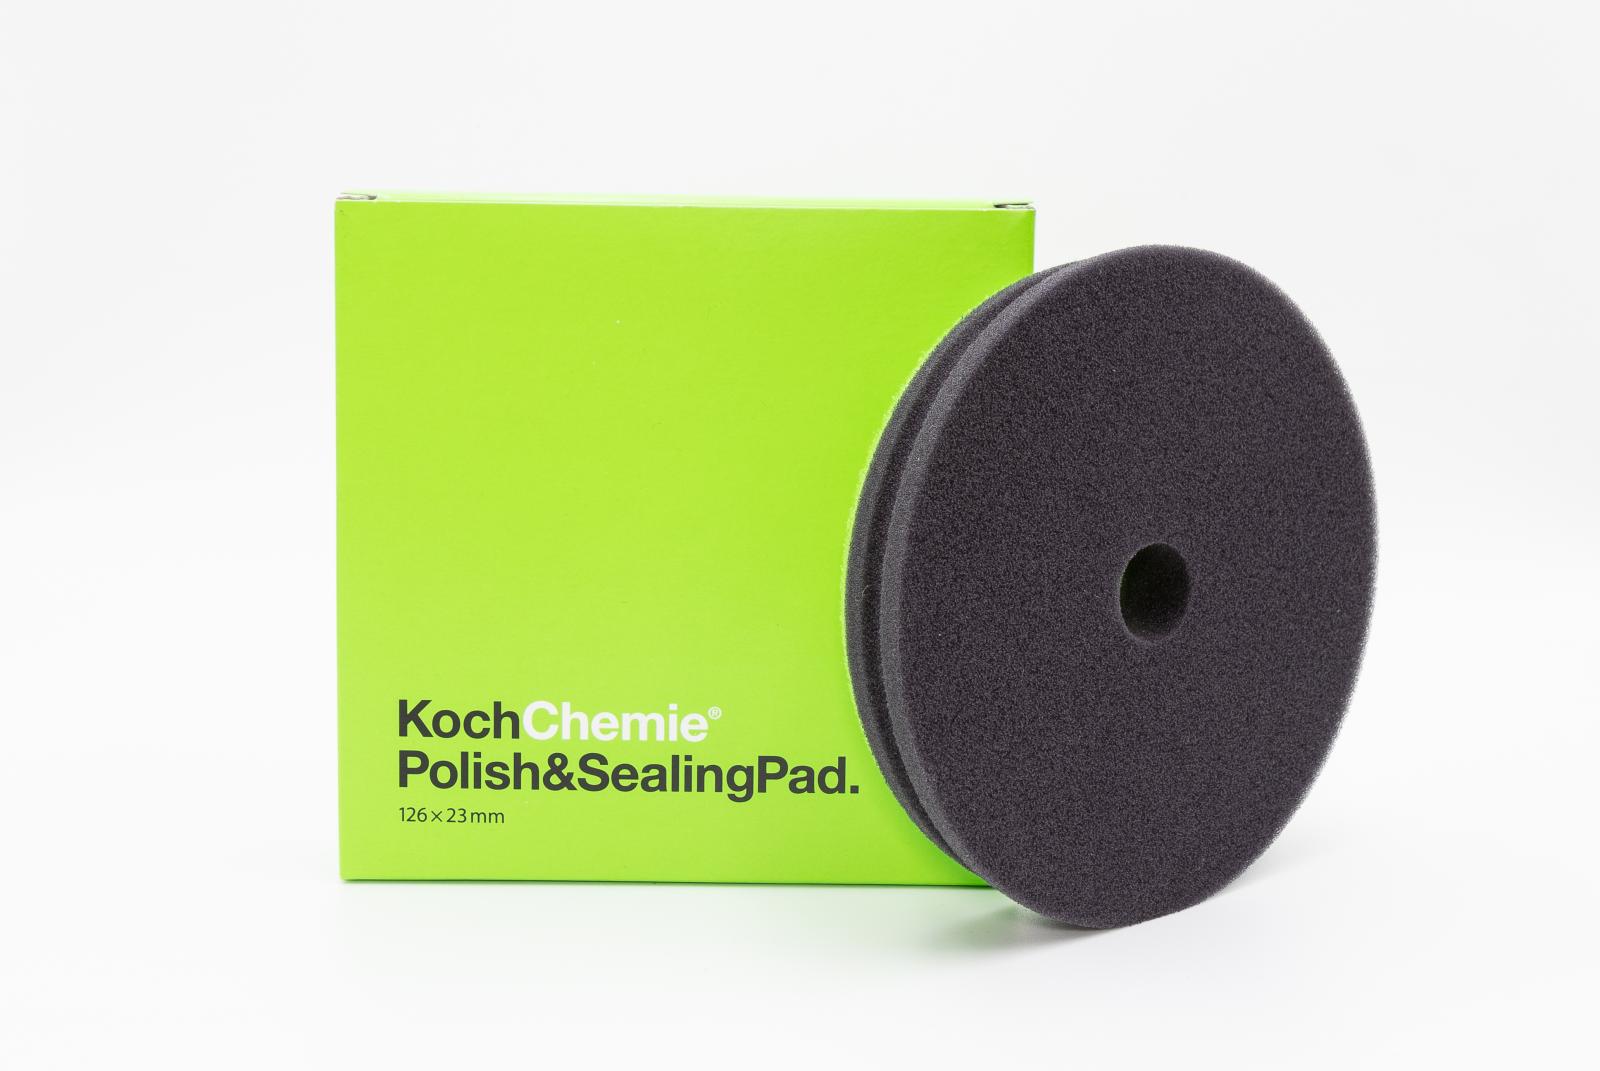 KochChemie Polish & Sealing Pad 126mm x 23mm finish kotuč